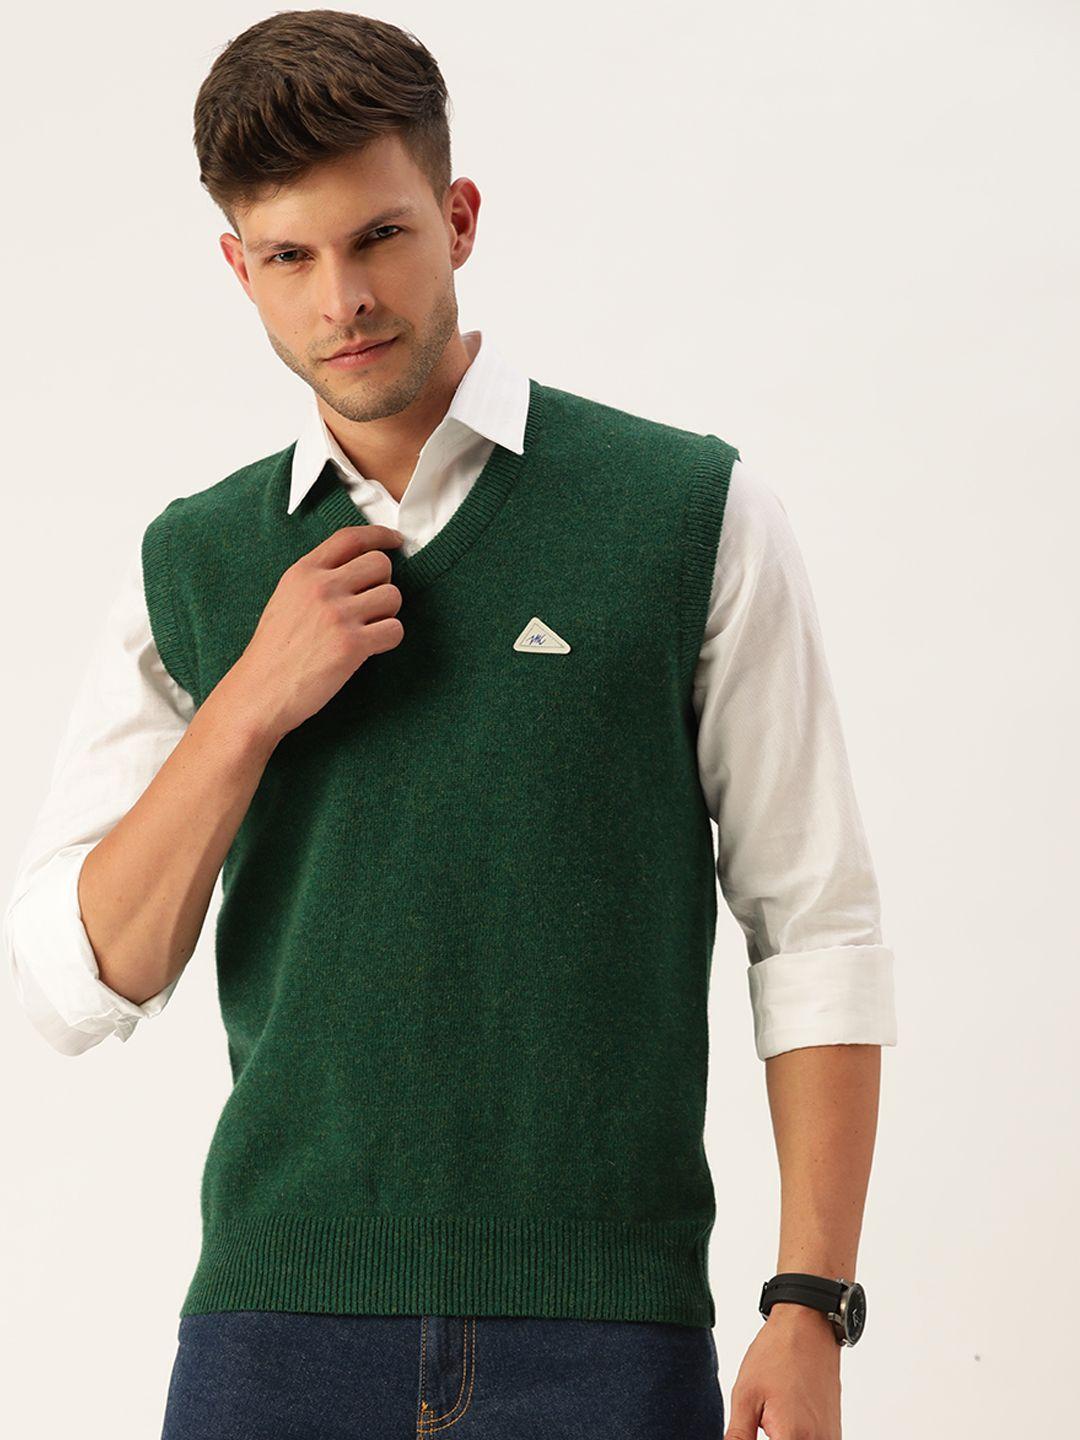 monte-carlo-men-green-solid-sweater-vest